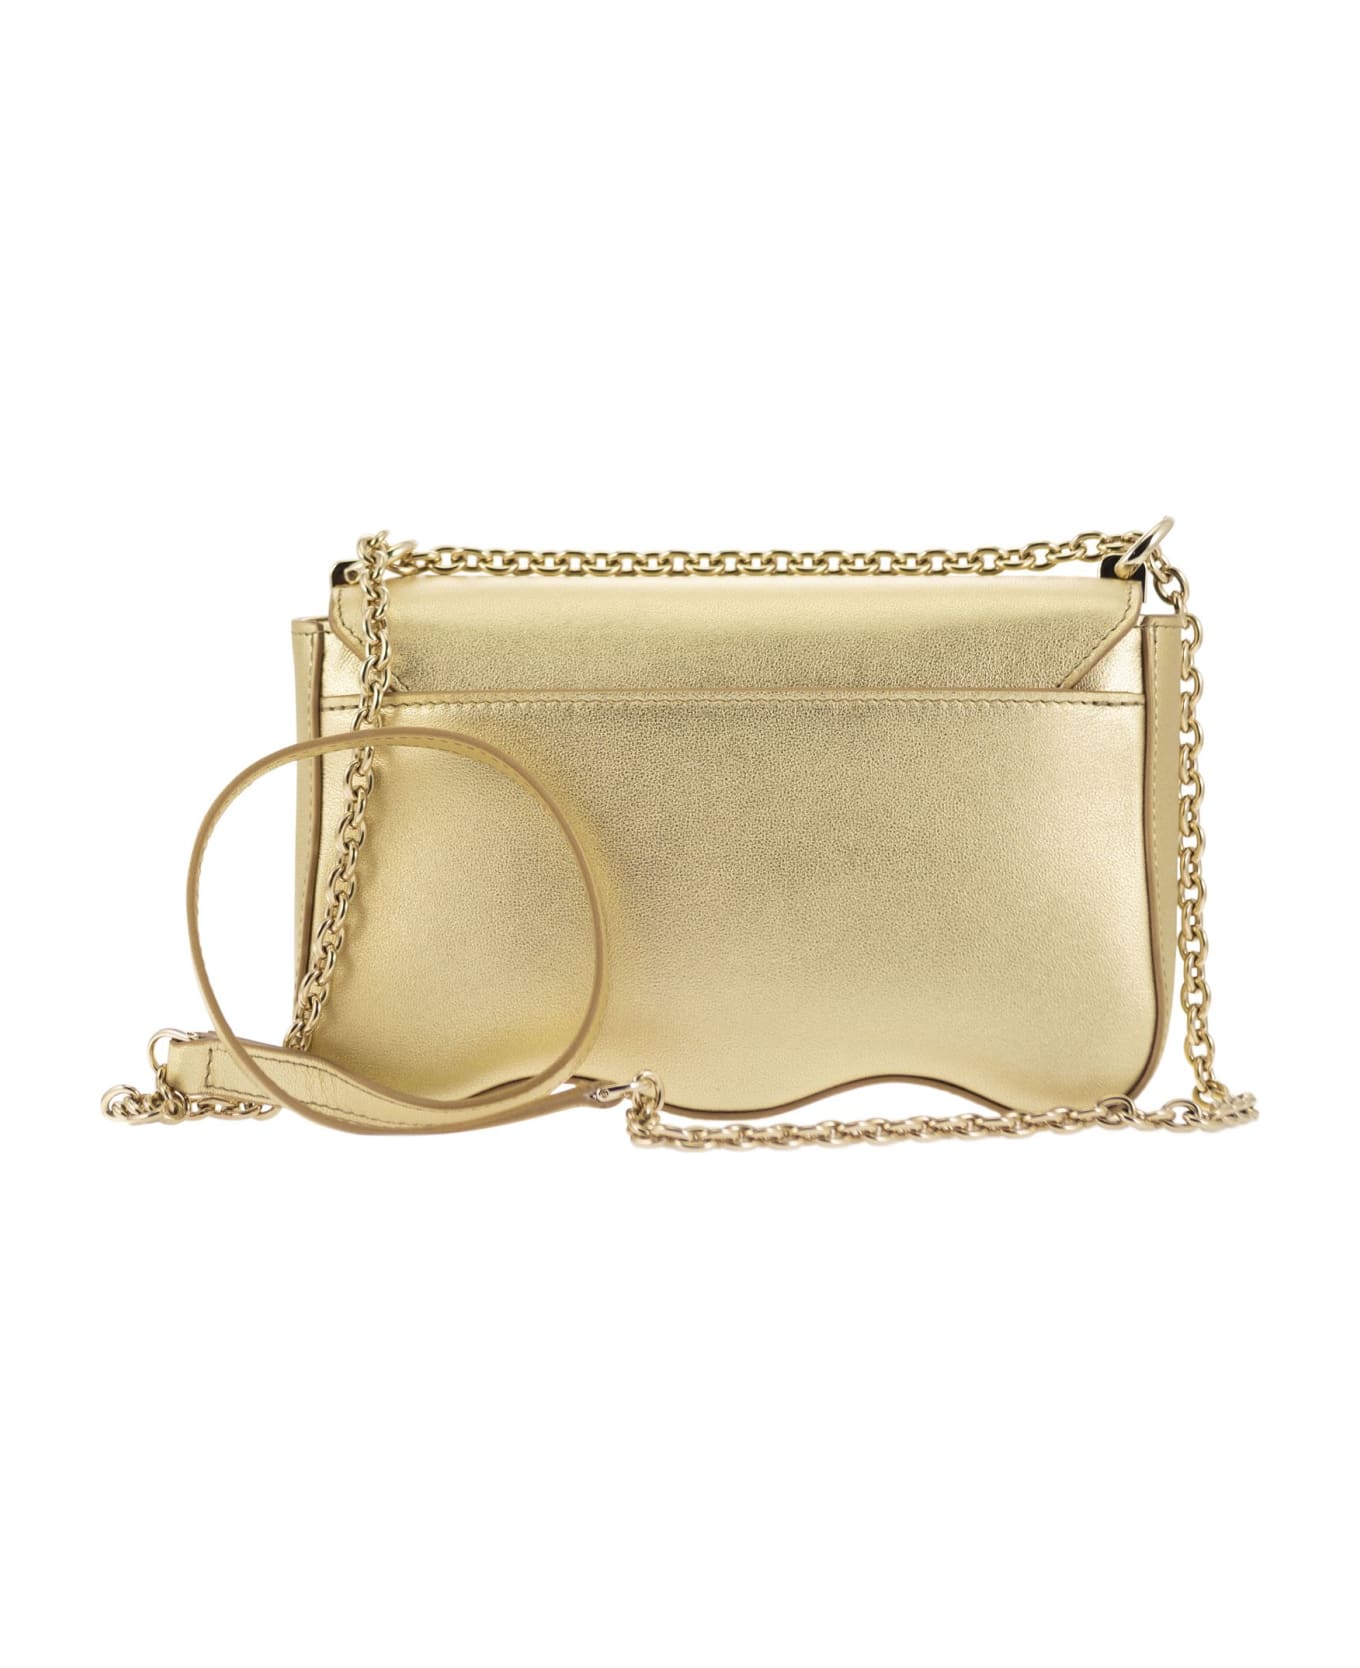 Furla 'furla 1927' Gold Calf Leather Bag - Gold